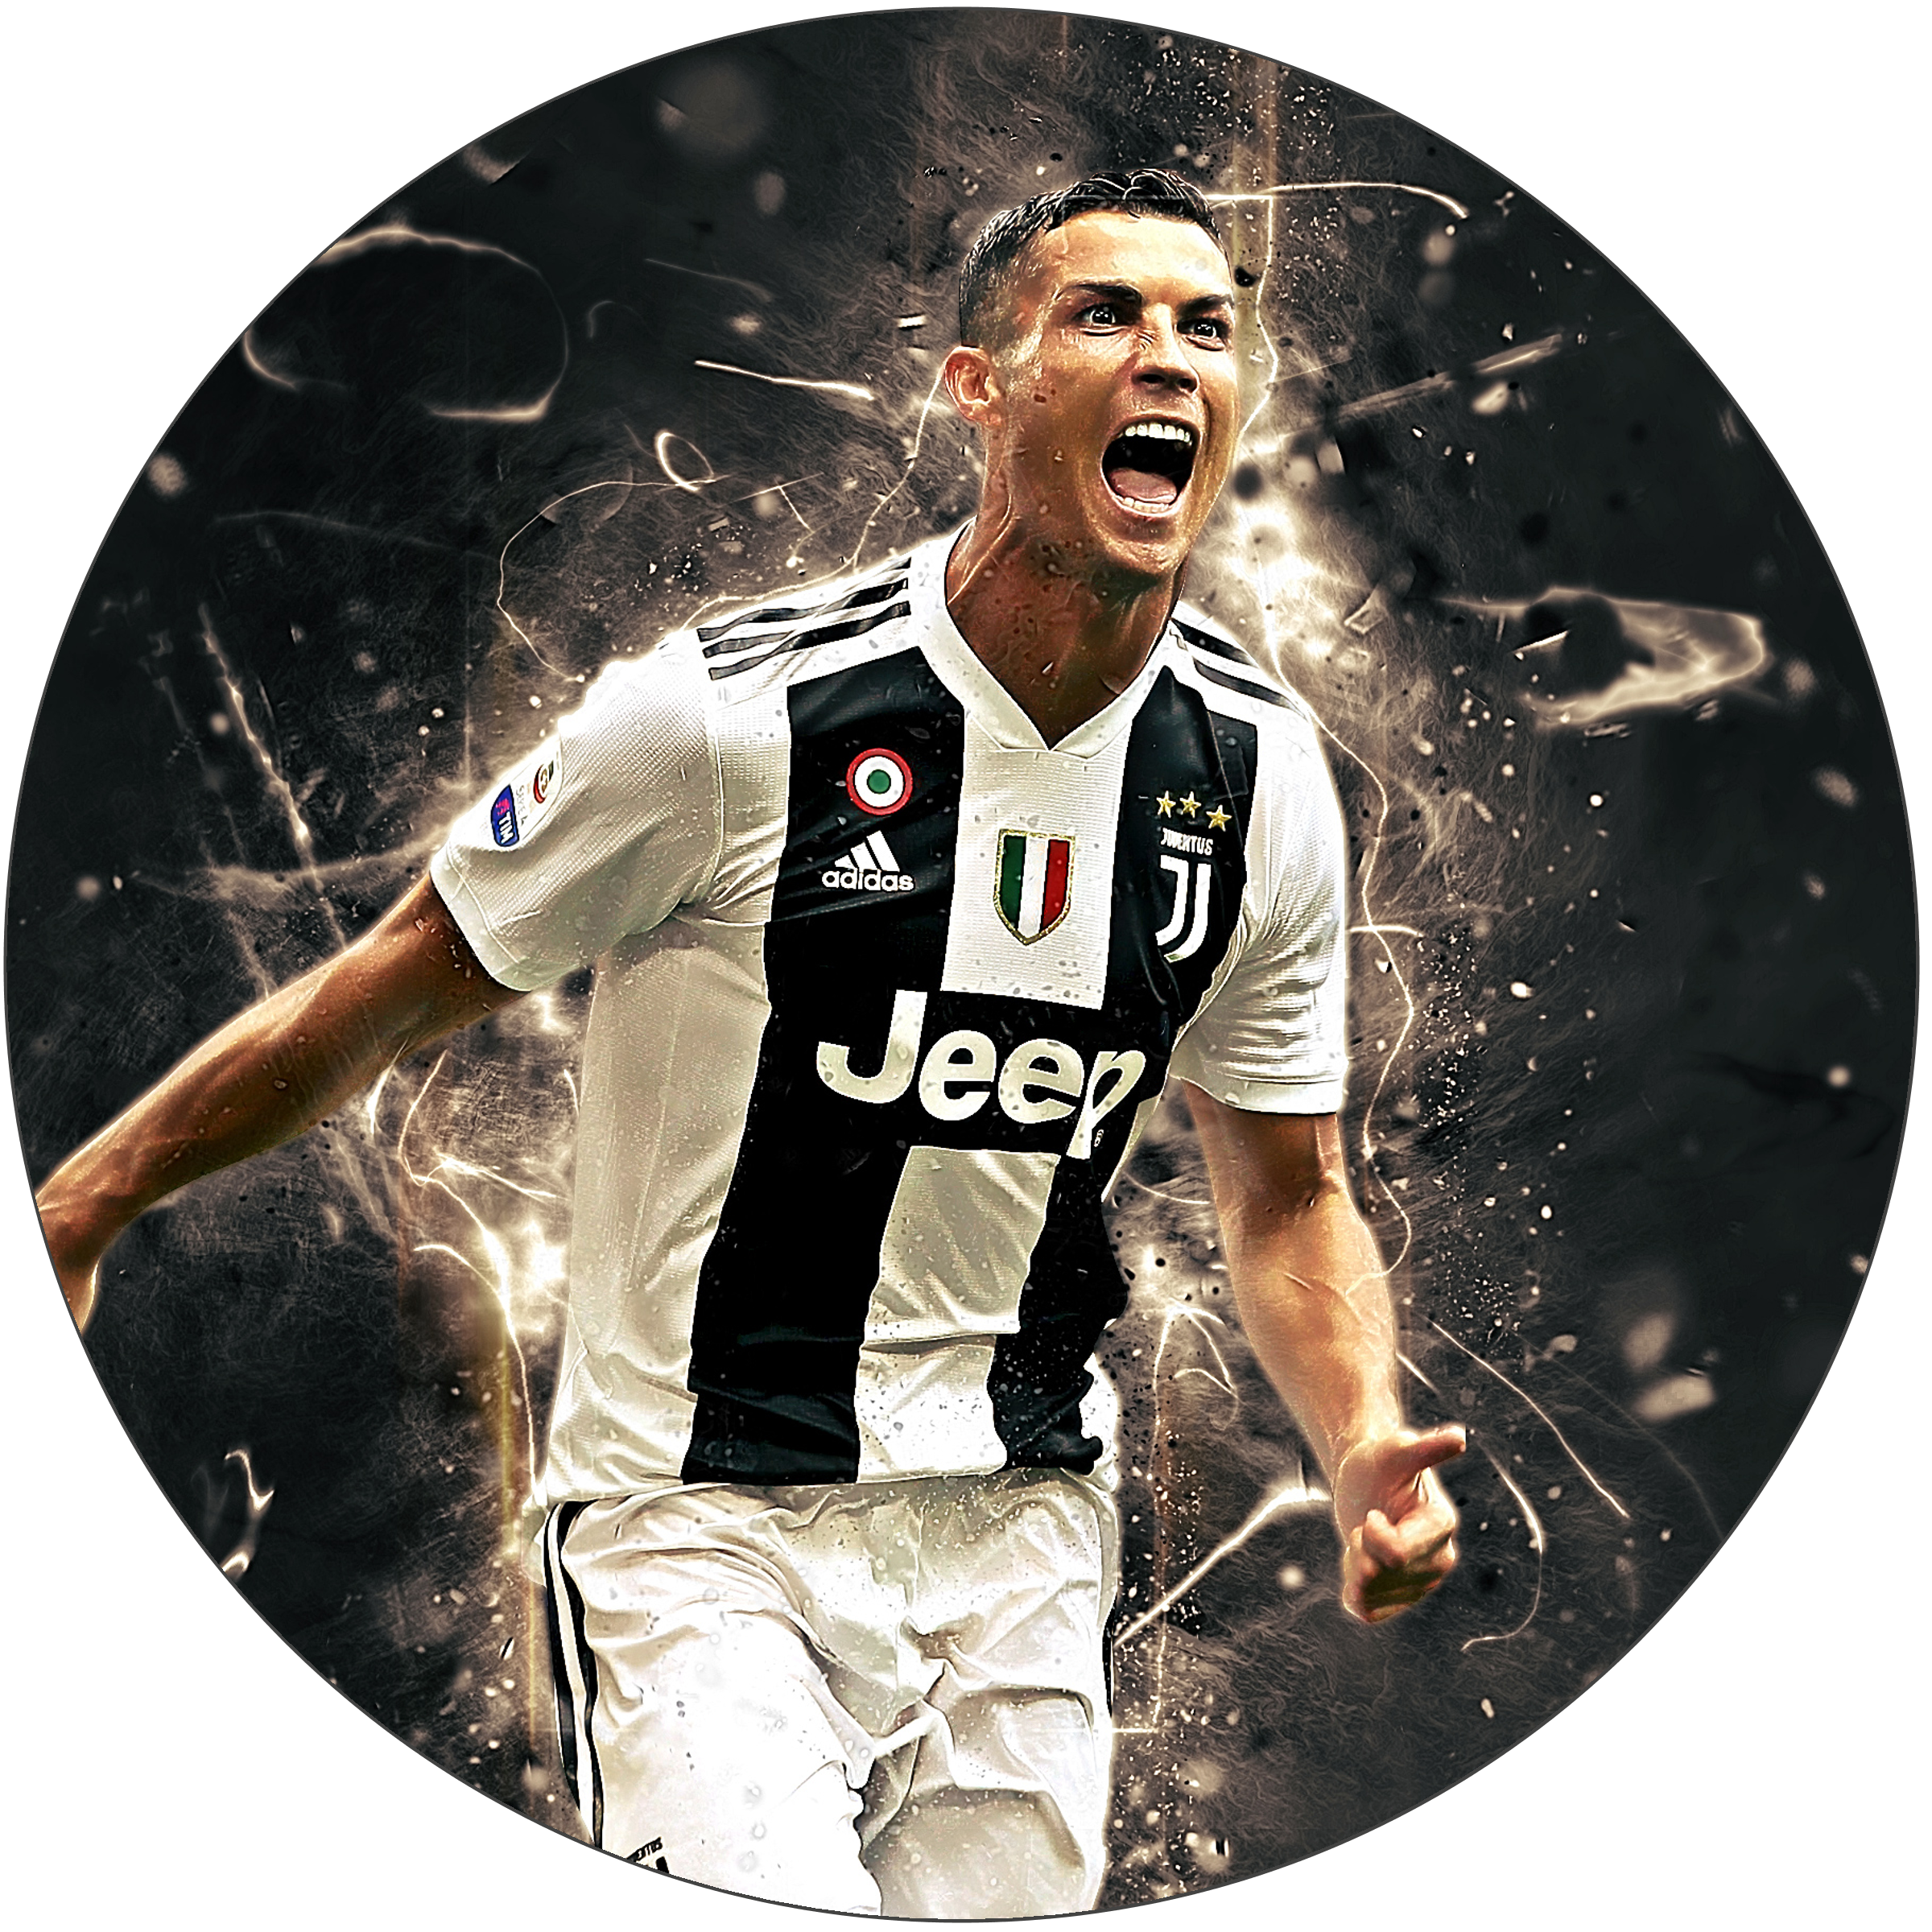 Juventus featuring Ronaldo Soccer themed cake